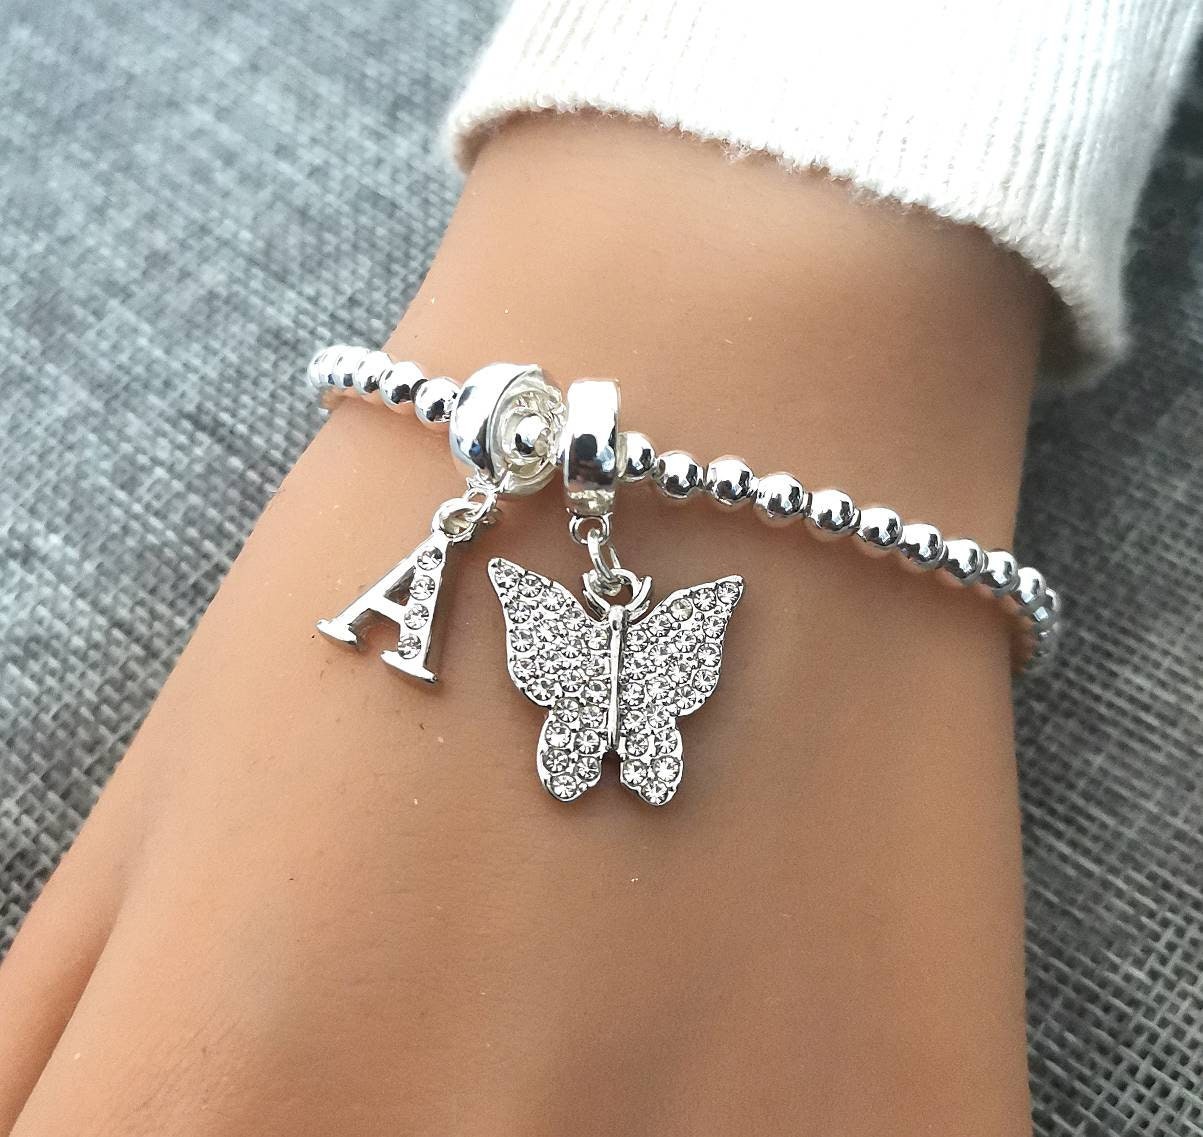 Butterfly bracelet, butterfly bracelet women, butterfly bracelet for her, silver bracelet women, butter fly charm jewelry, sister bracelet